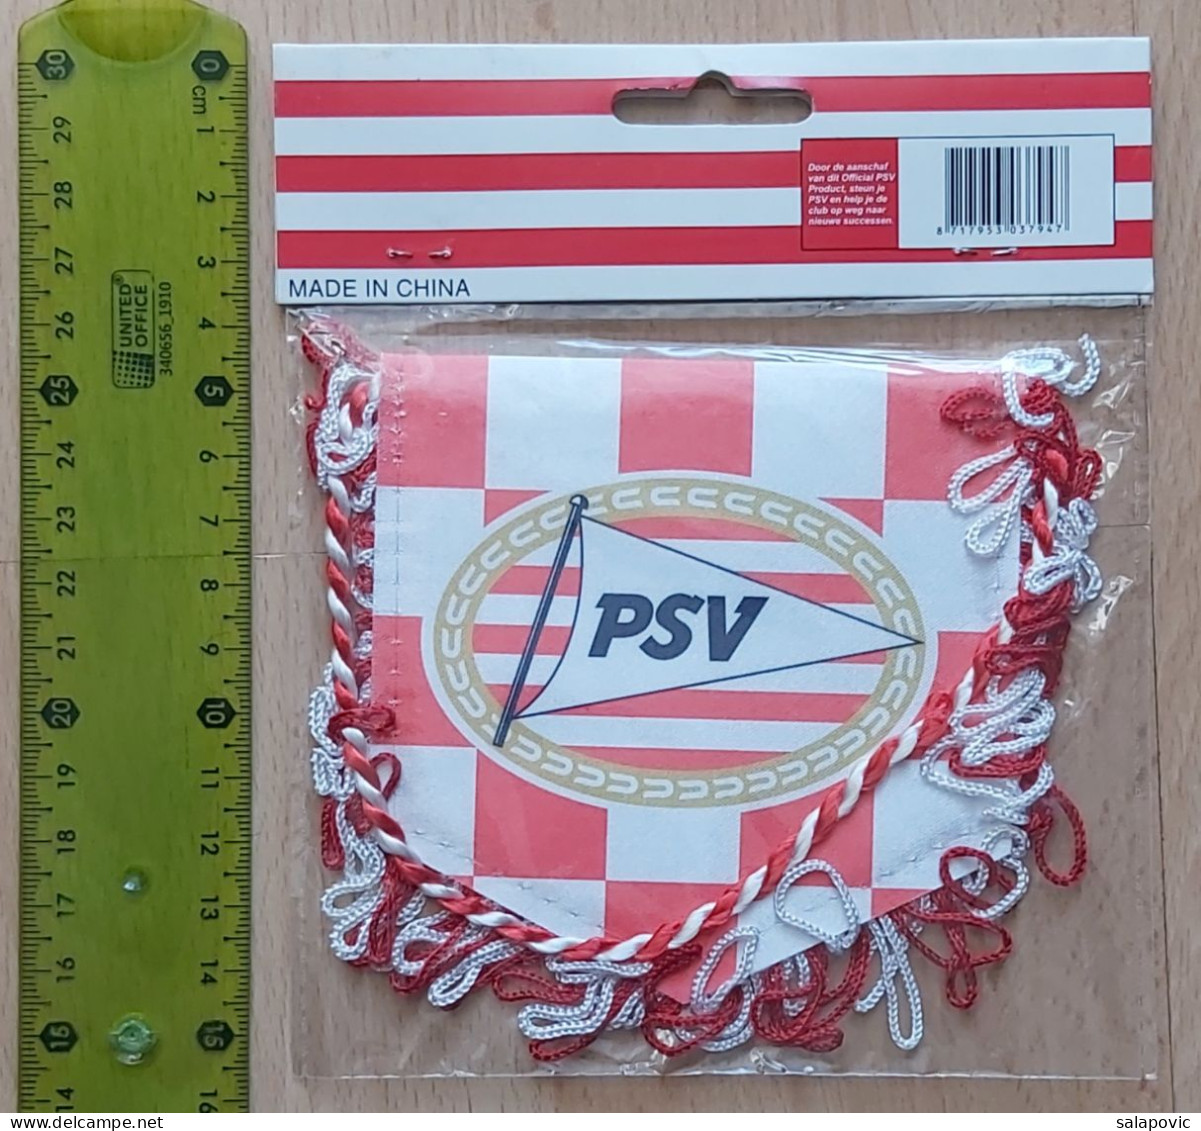 PSV Eindhoven Netherlands Football Club SOCCER, FUTBOL, CALCIO PENNANT, SPORTS FLAG ZS 3/18 - Kleding, Souvenirs & Andere